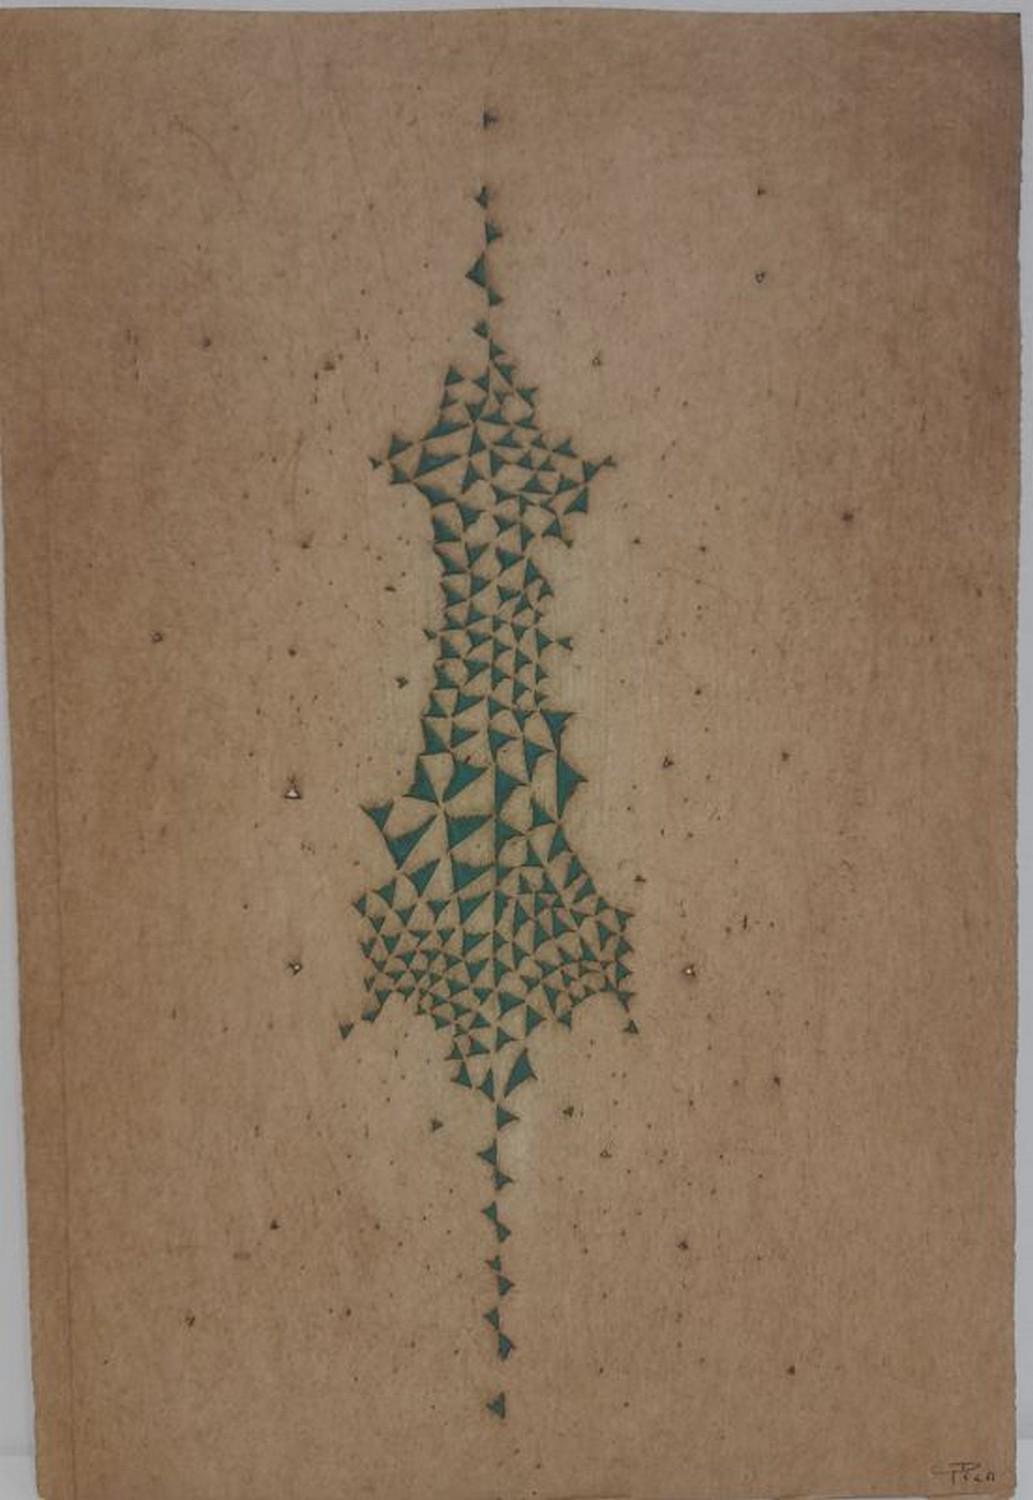 Lichens  - Print by Arthur Luis Piza